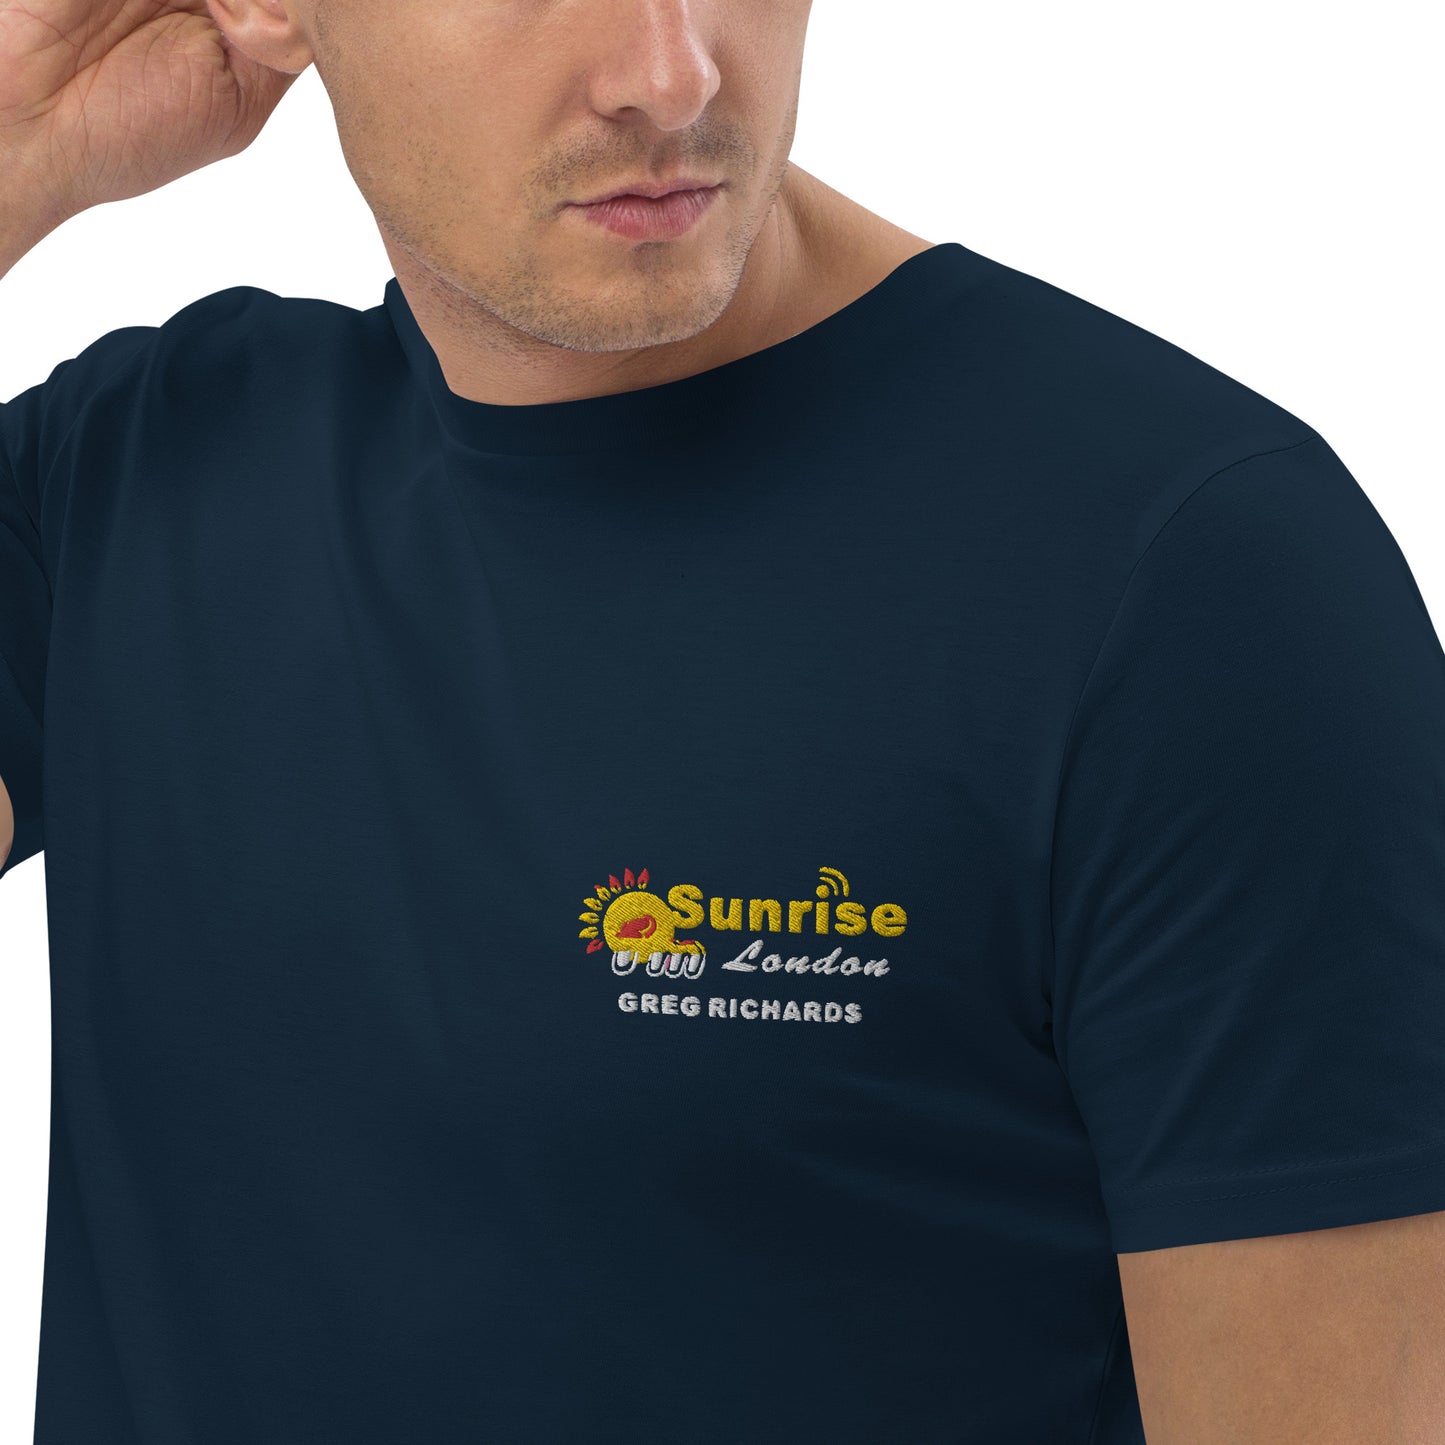 Unisex Cotton T-Shirt (GregRichards)